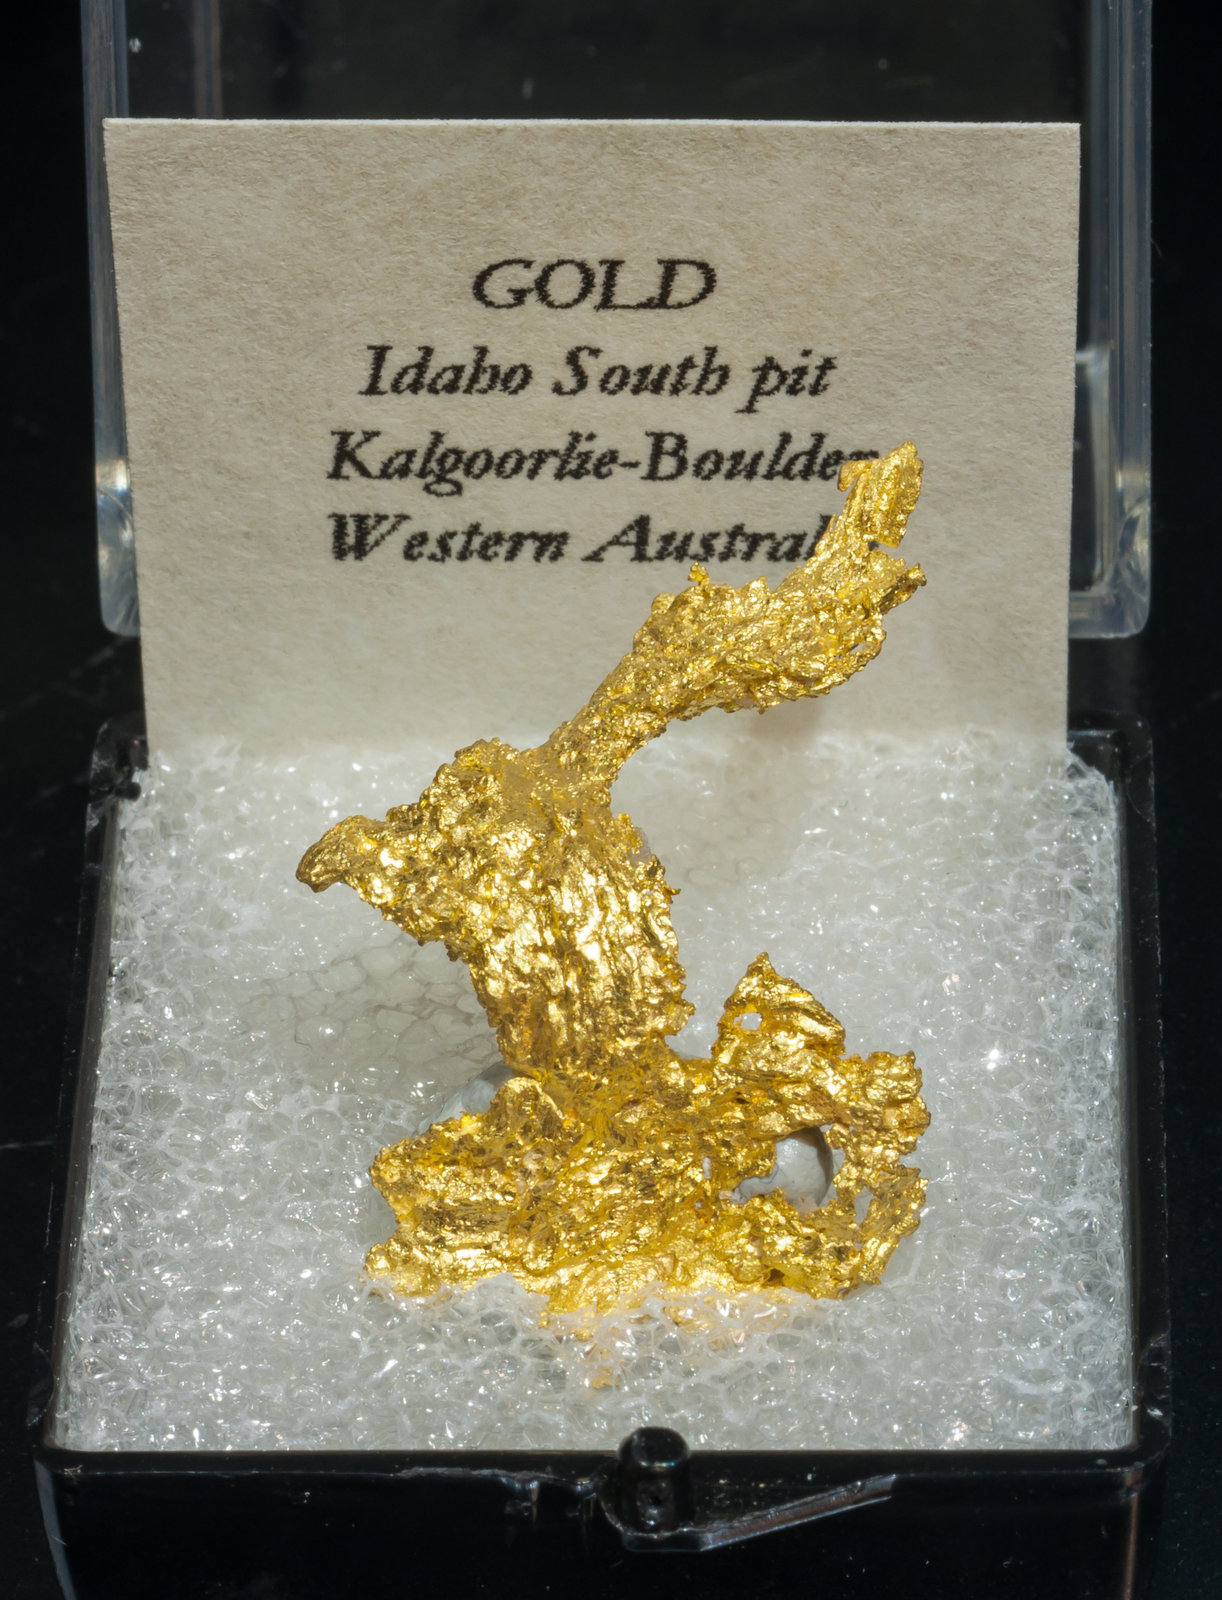 specimens/s_imagesAK9/Gold-TE92AK9f1.jpg